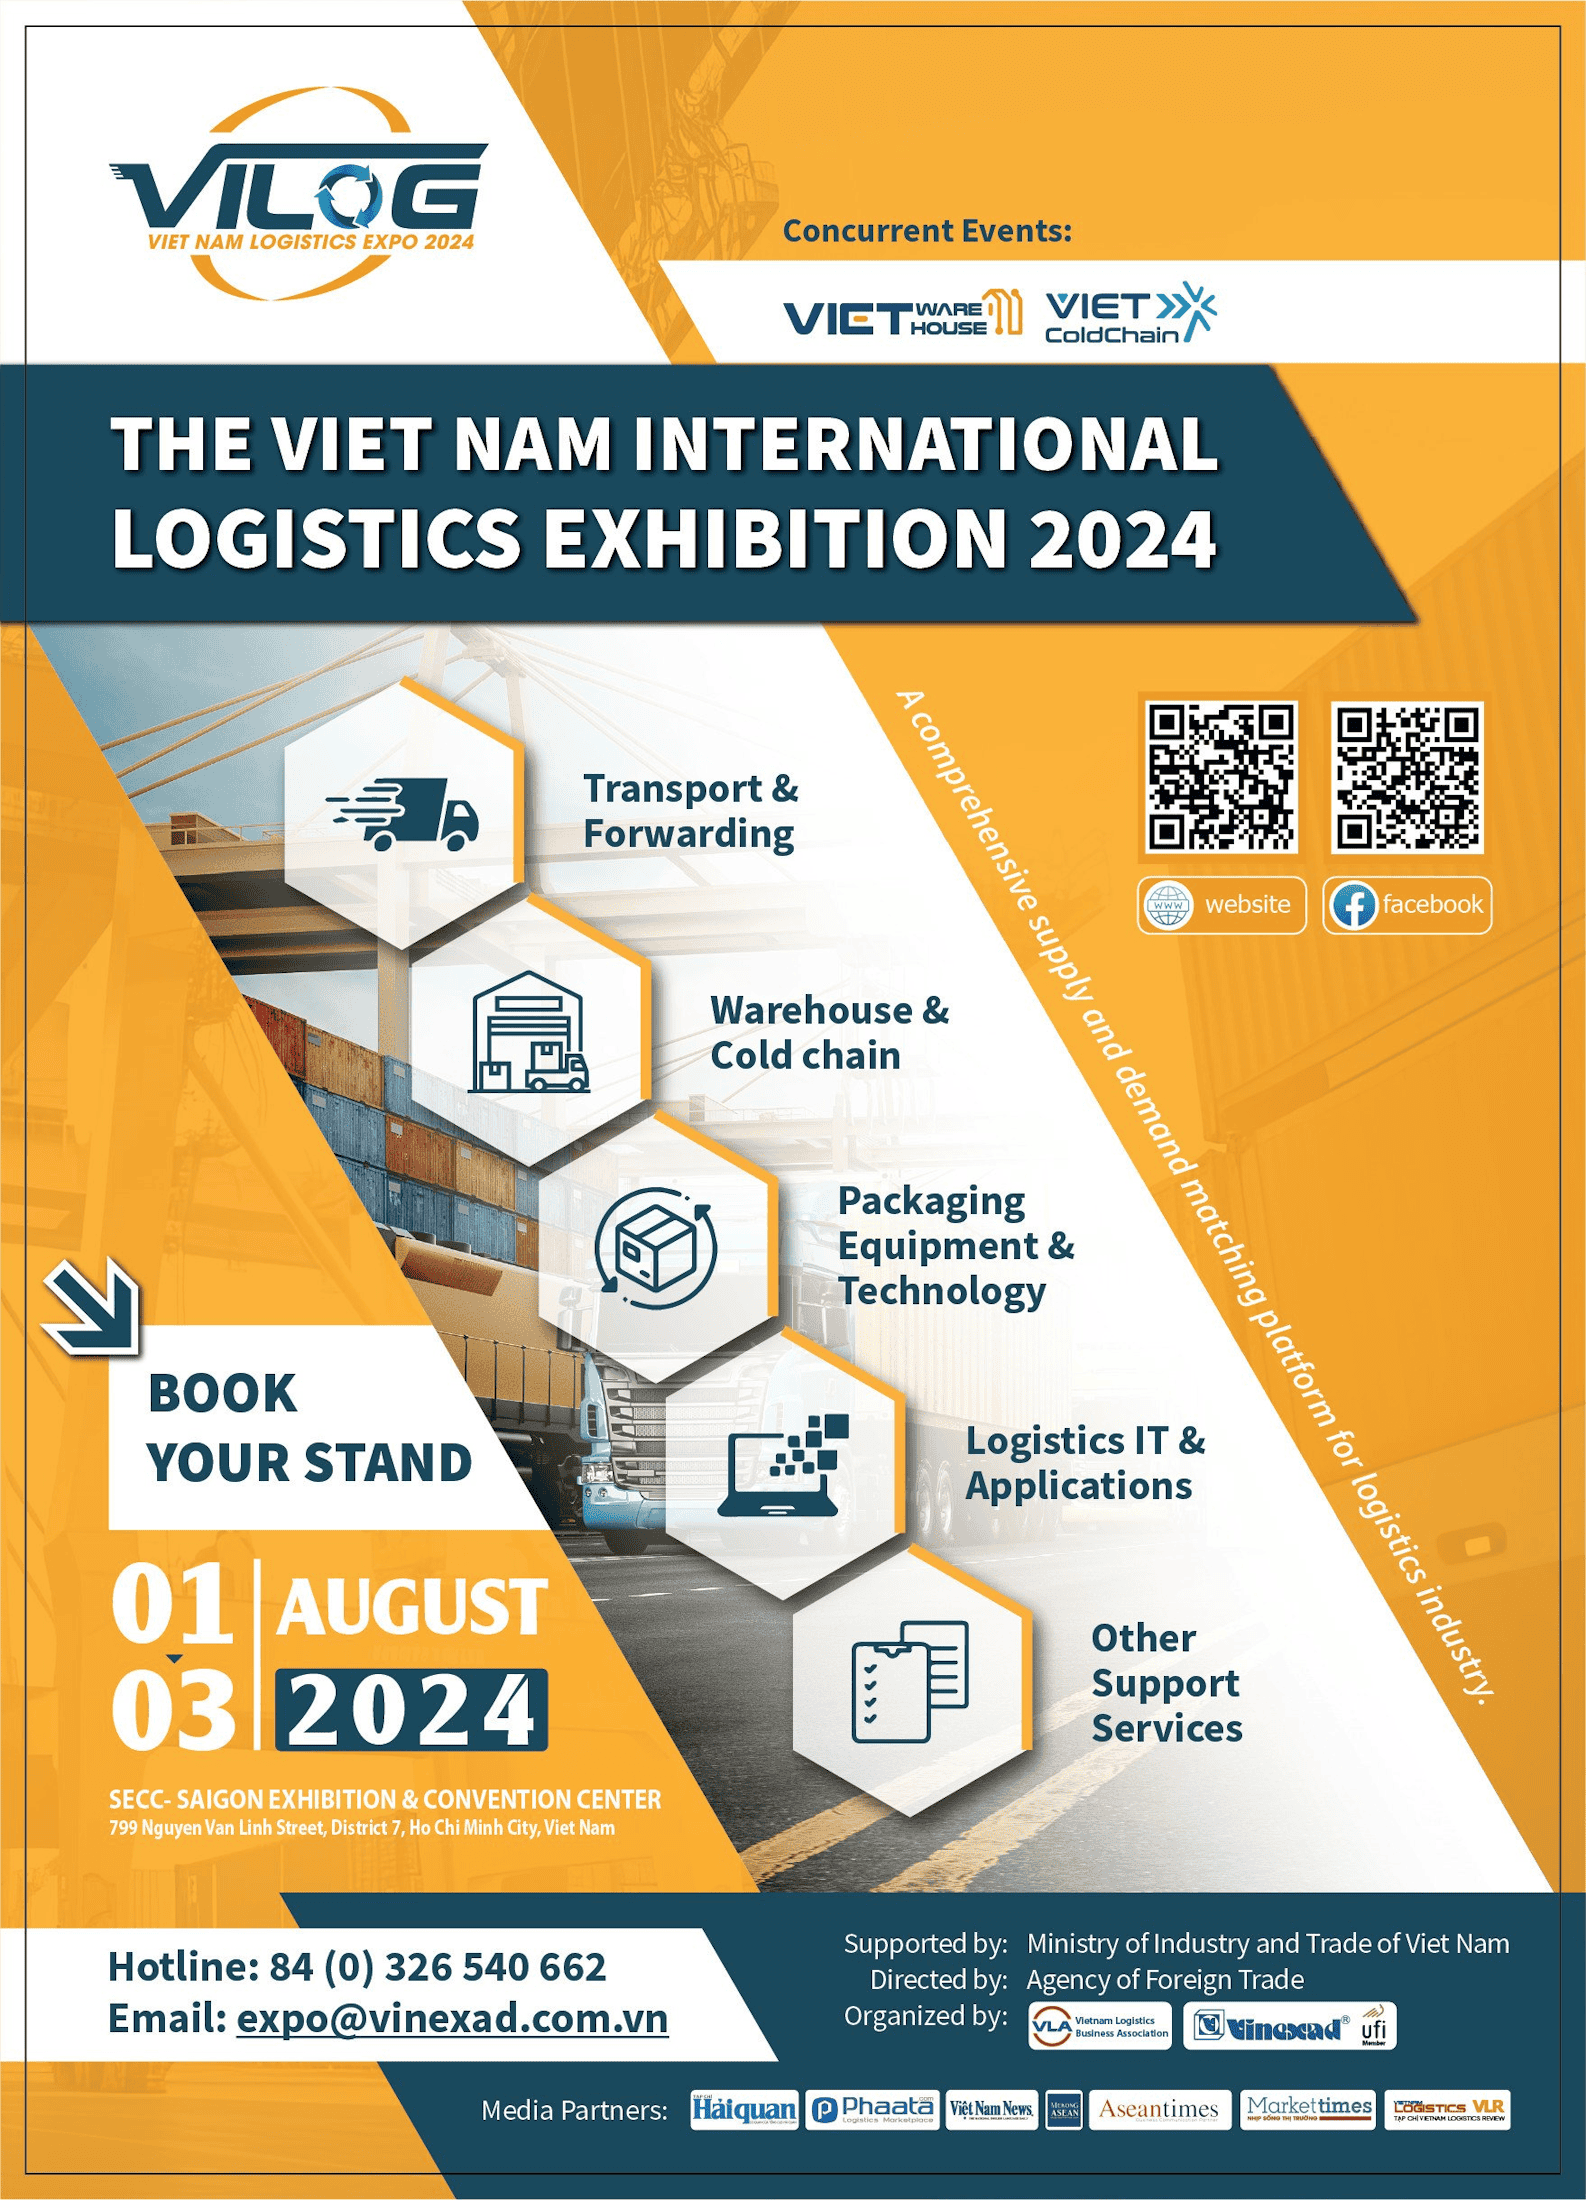 The Viet Nam International Logistics Exhibition 2024